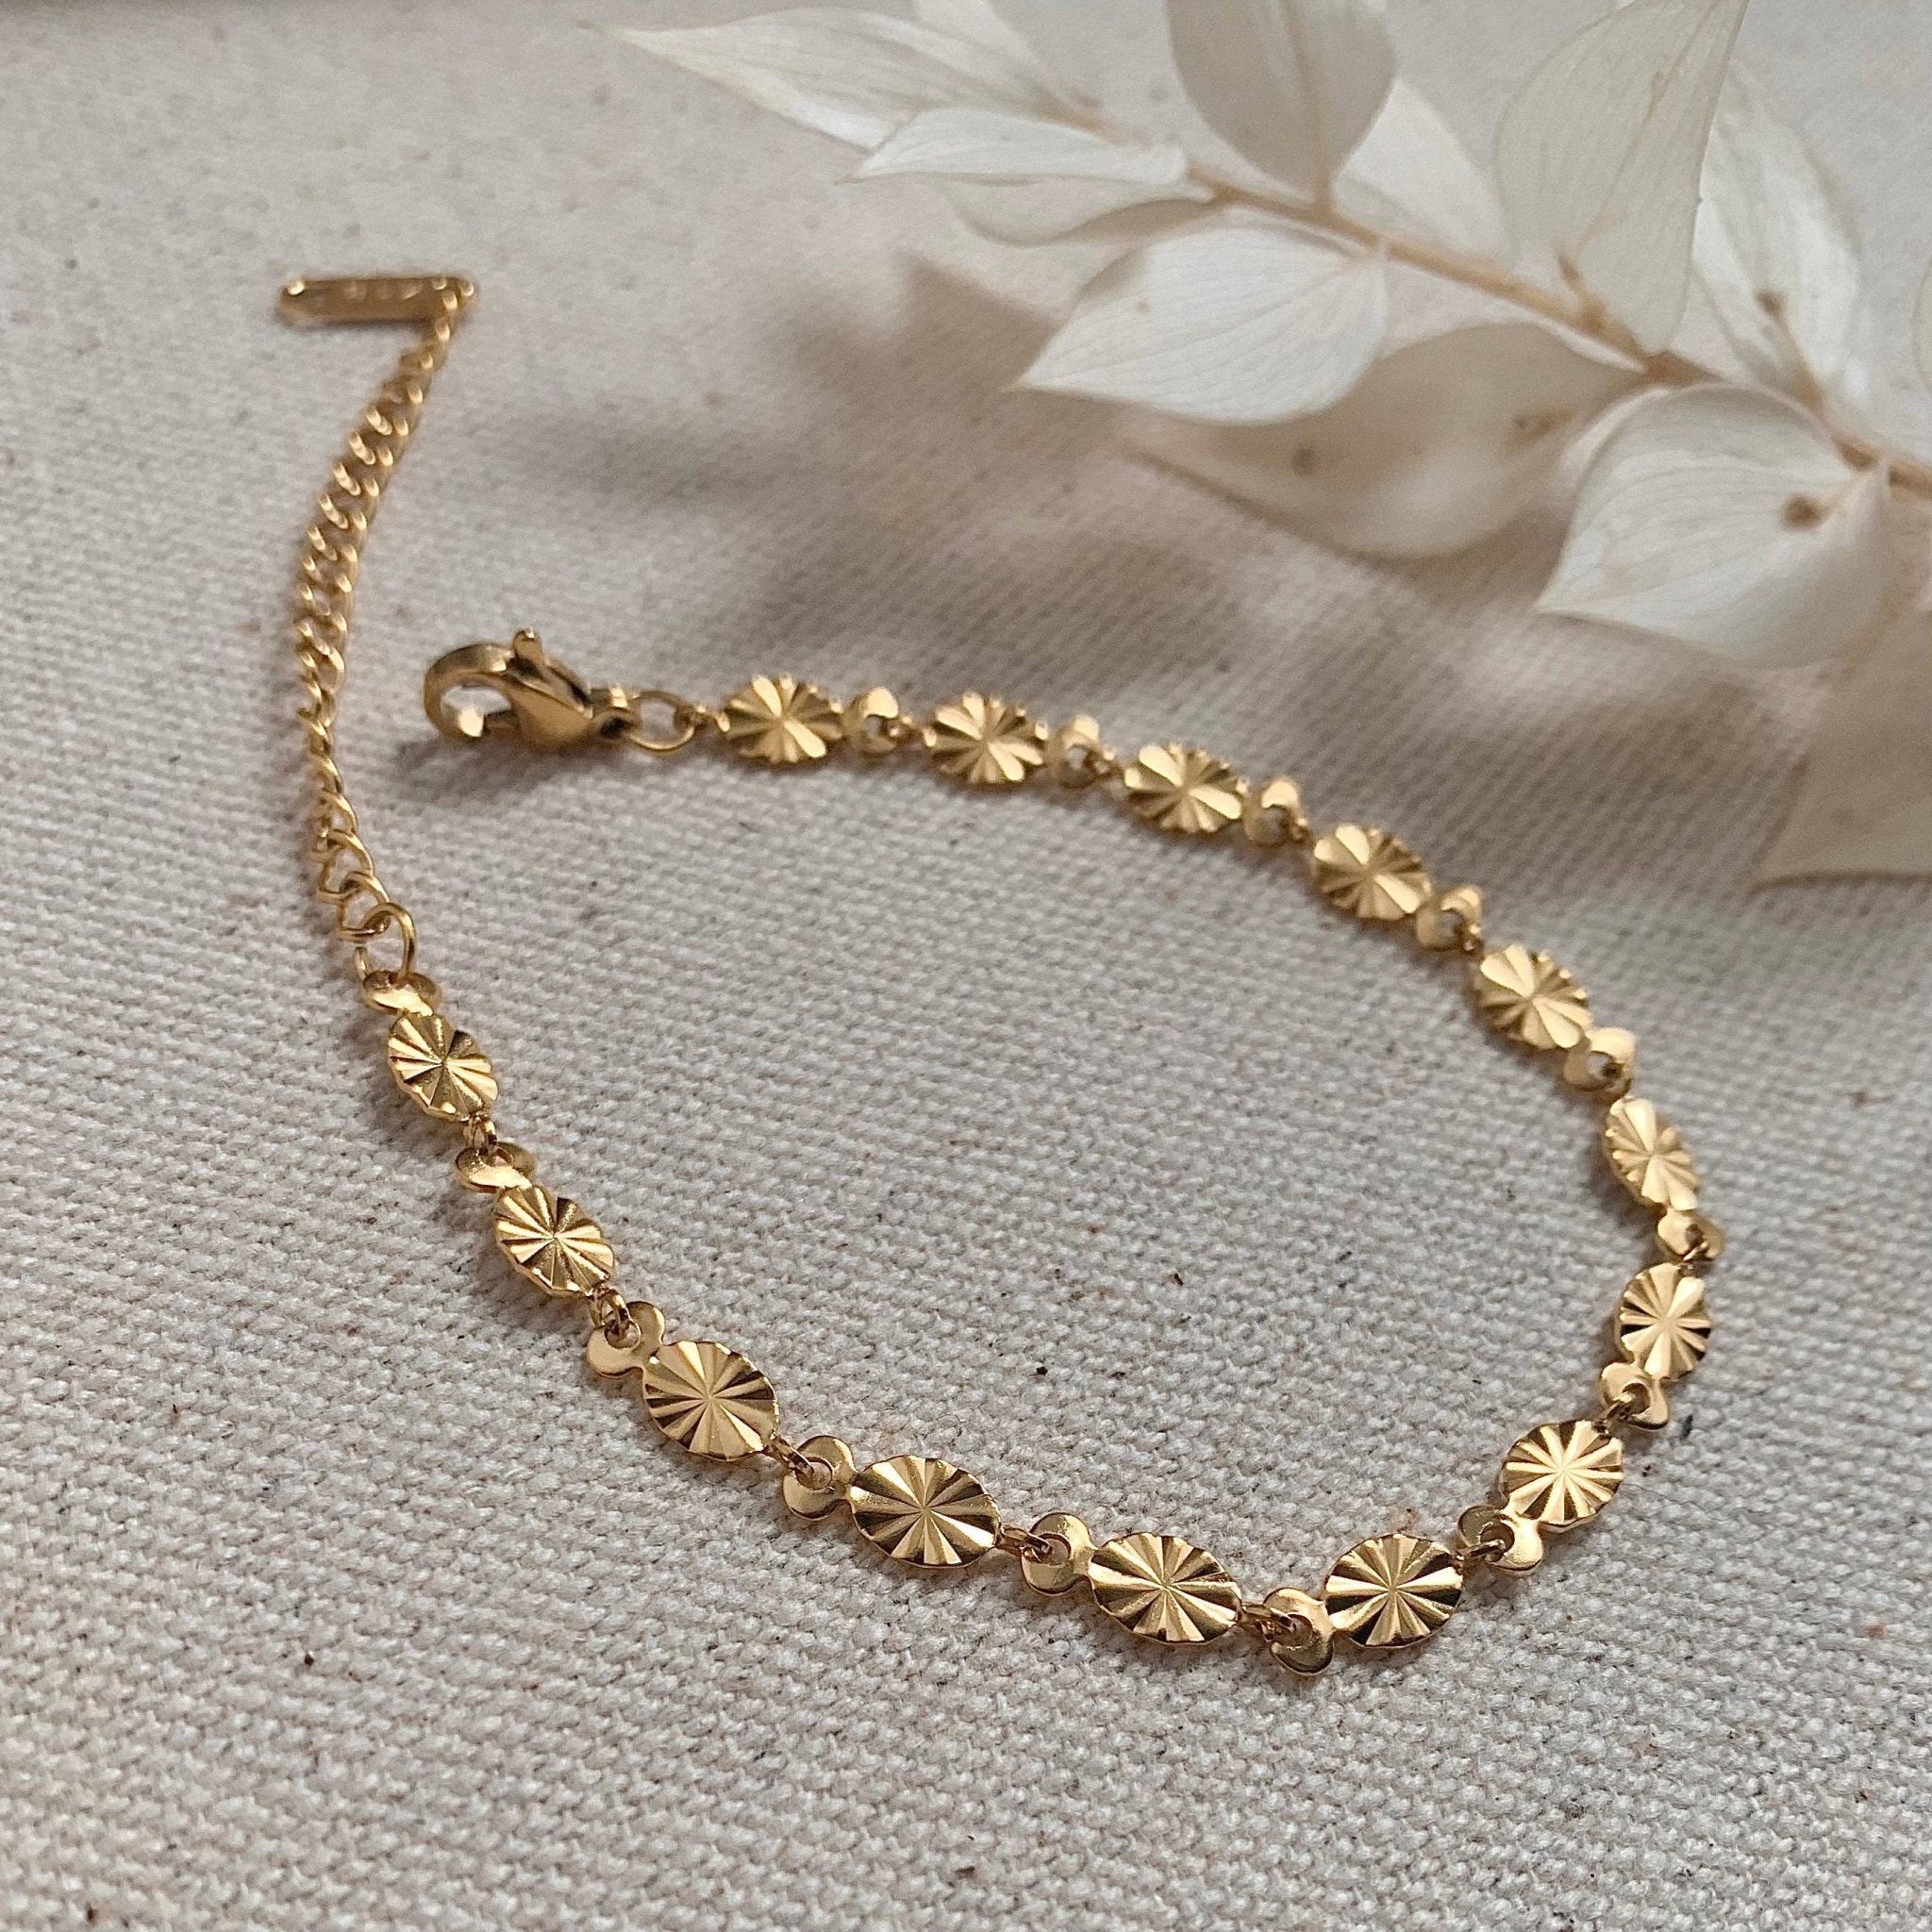 LITTLE NELL - 18k Gold Plated Oval Sunburst Chain Bracelet - Waterproof - Annabelle 87